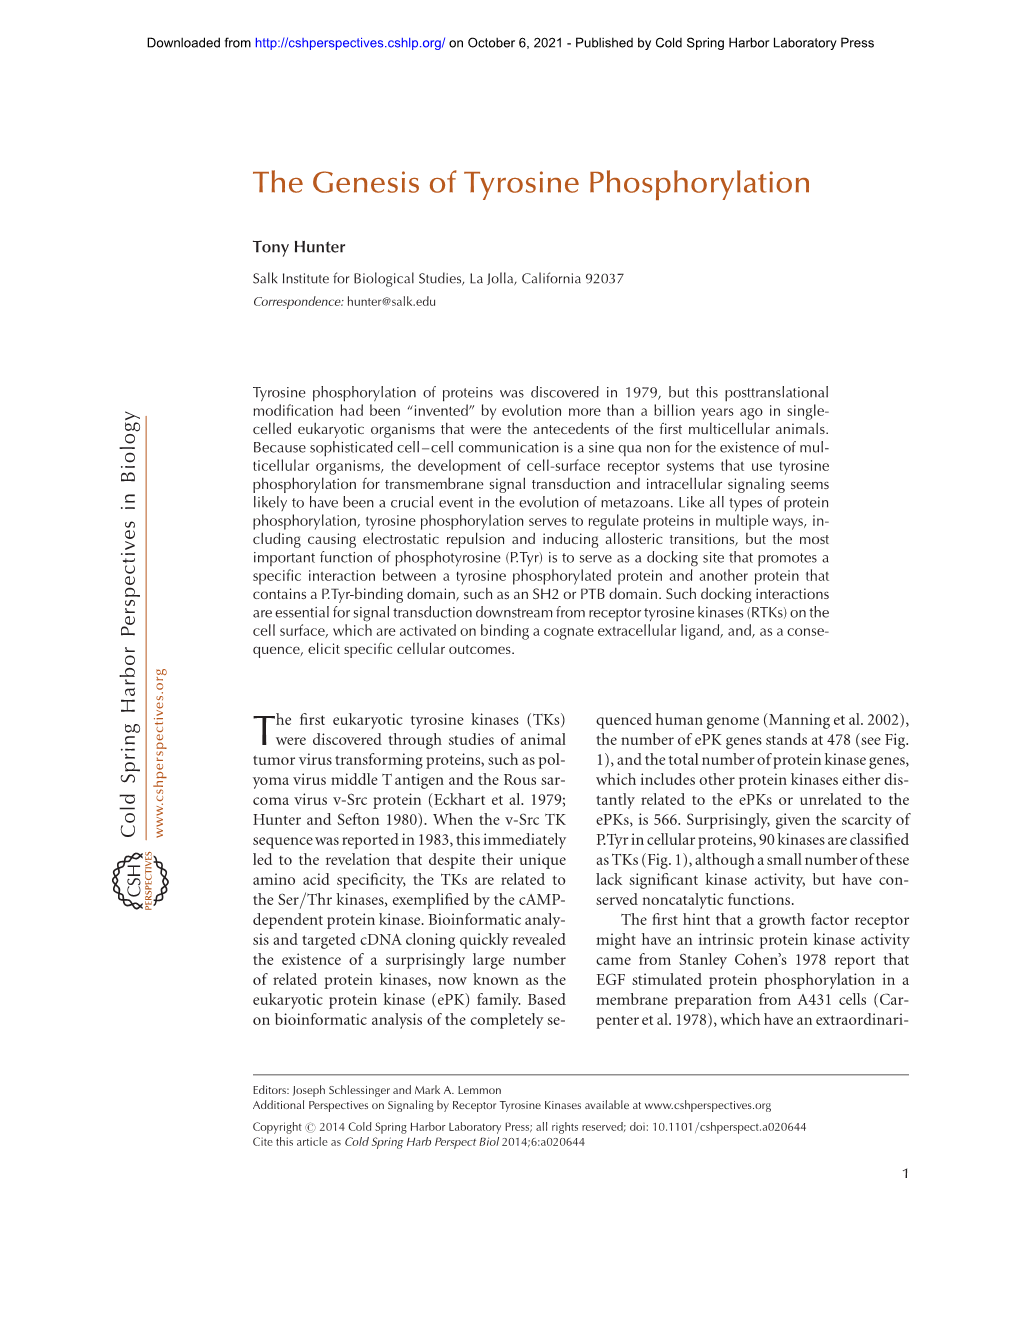 The Genesis of Tyrosine Phosphorylation